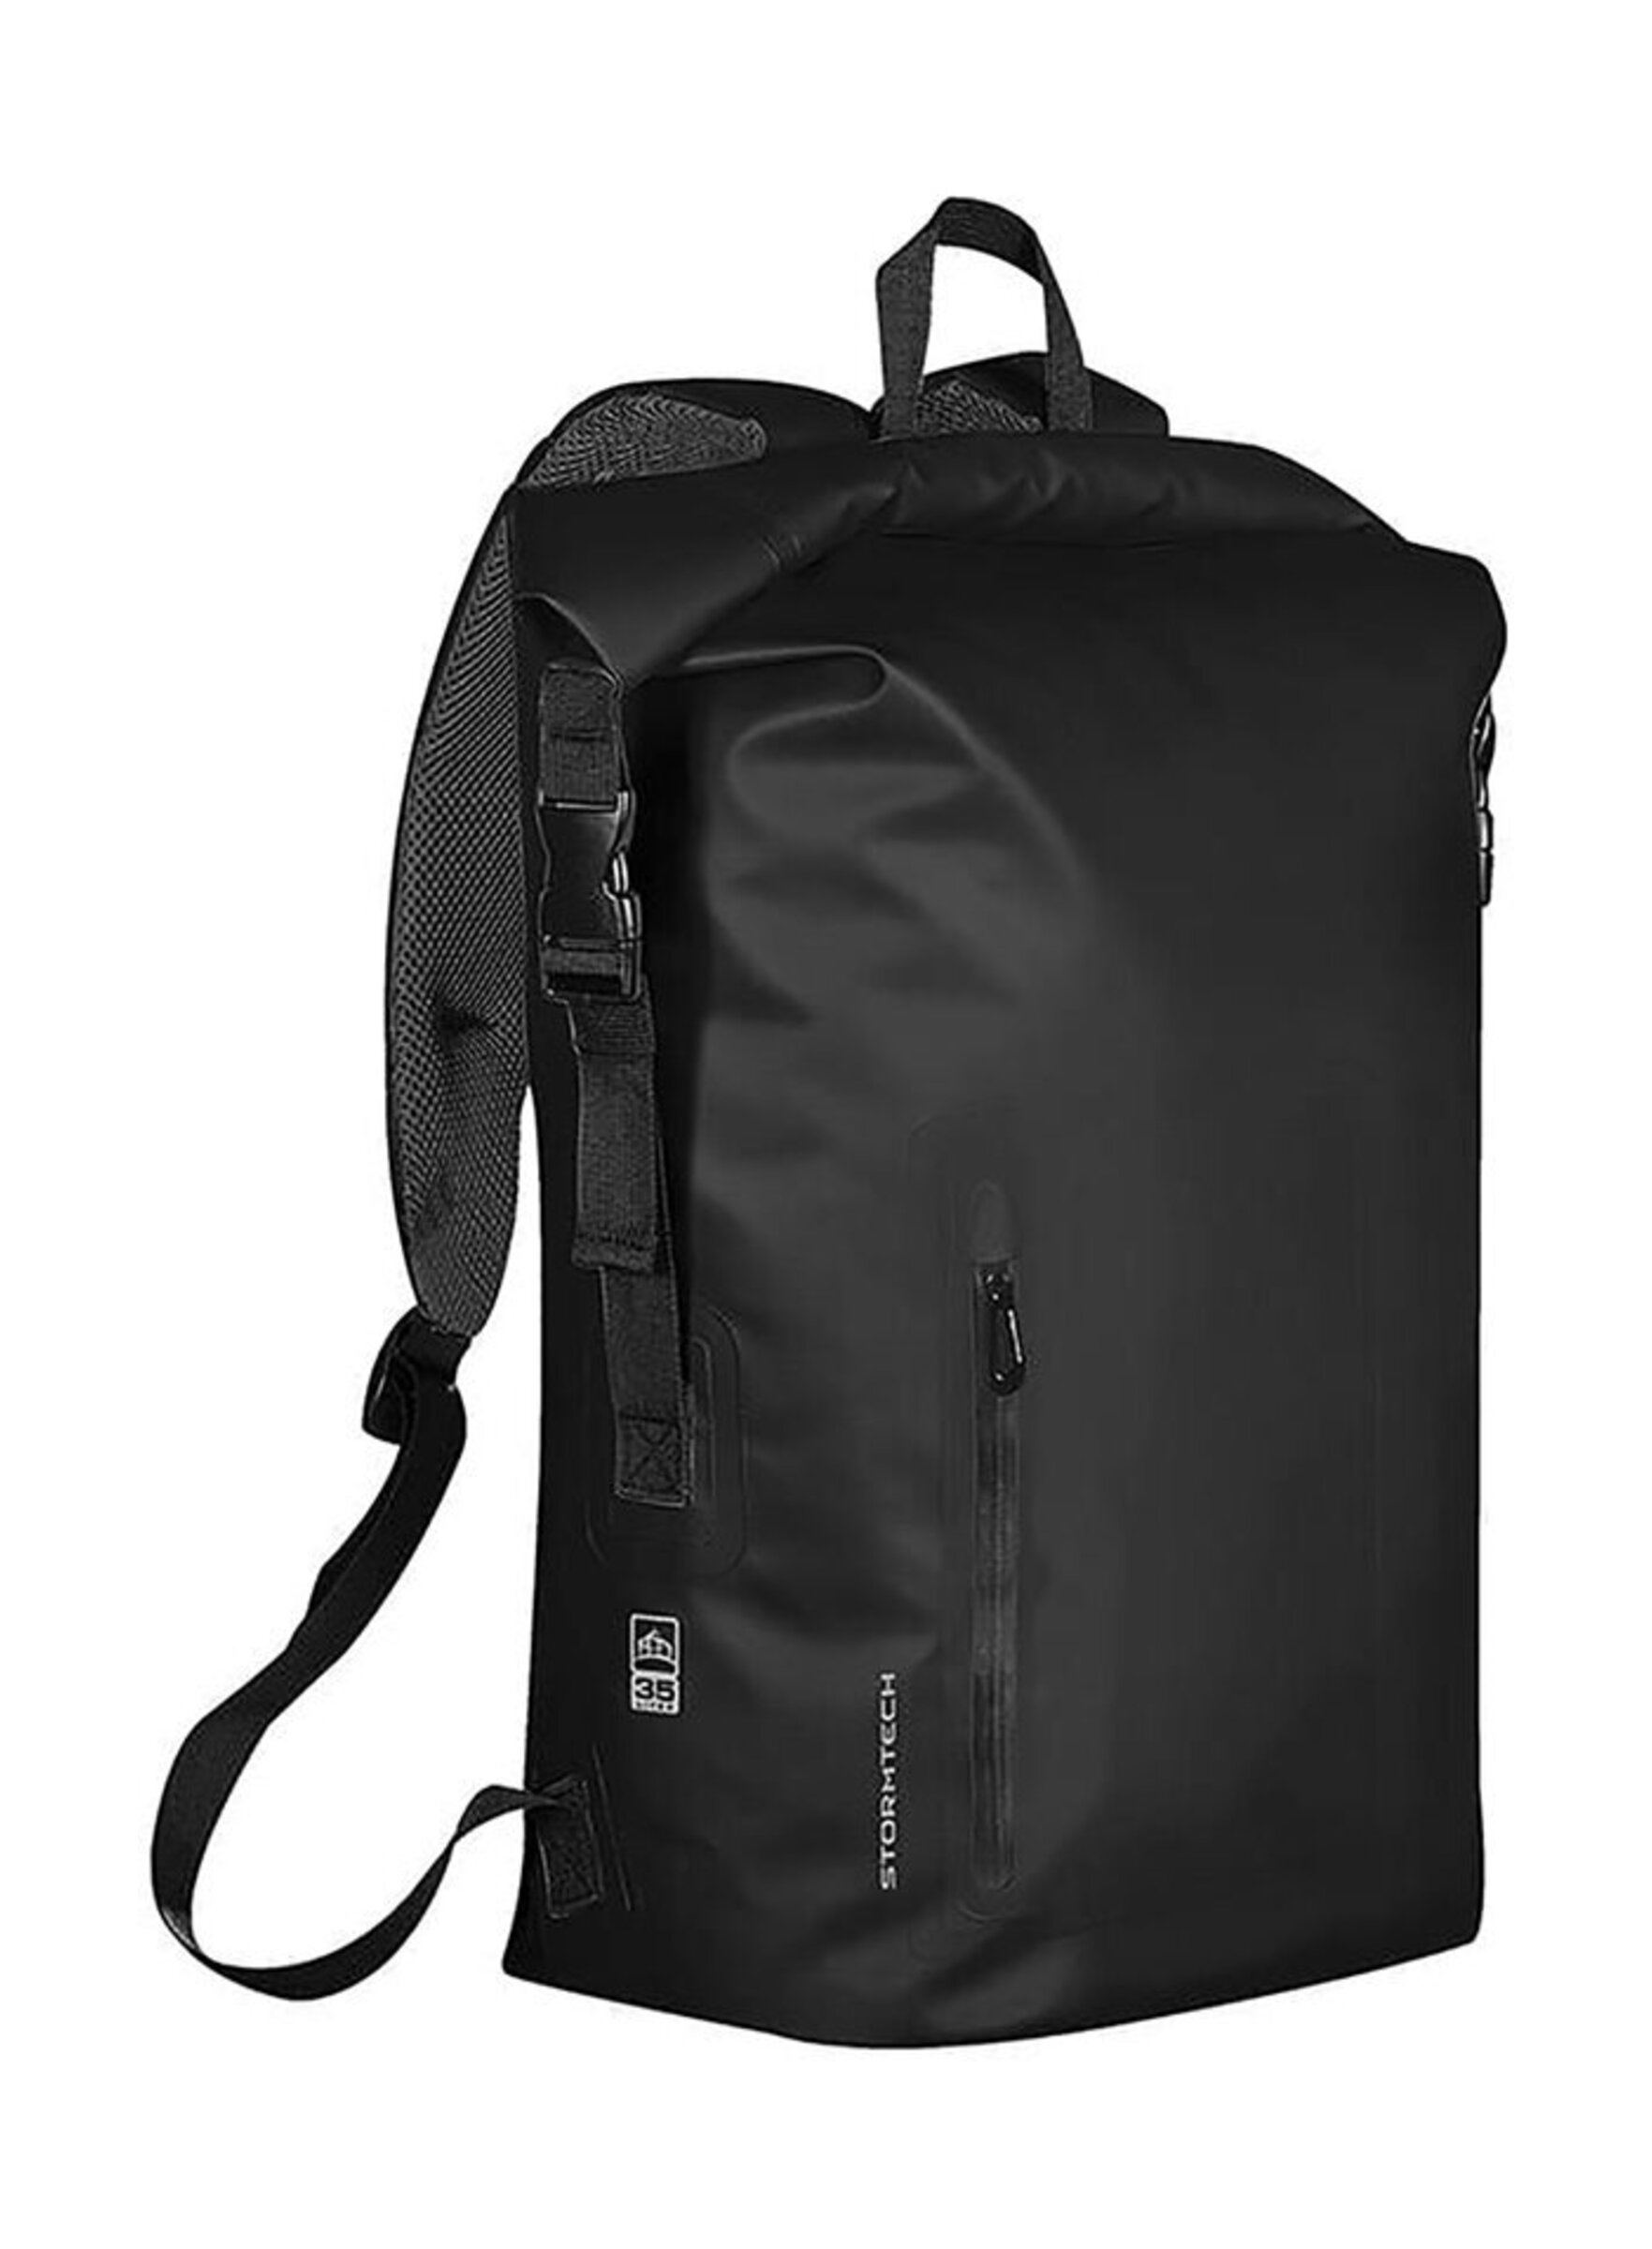 Stormtech Cascade Waterproof Backpack - 35l